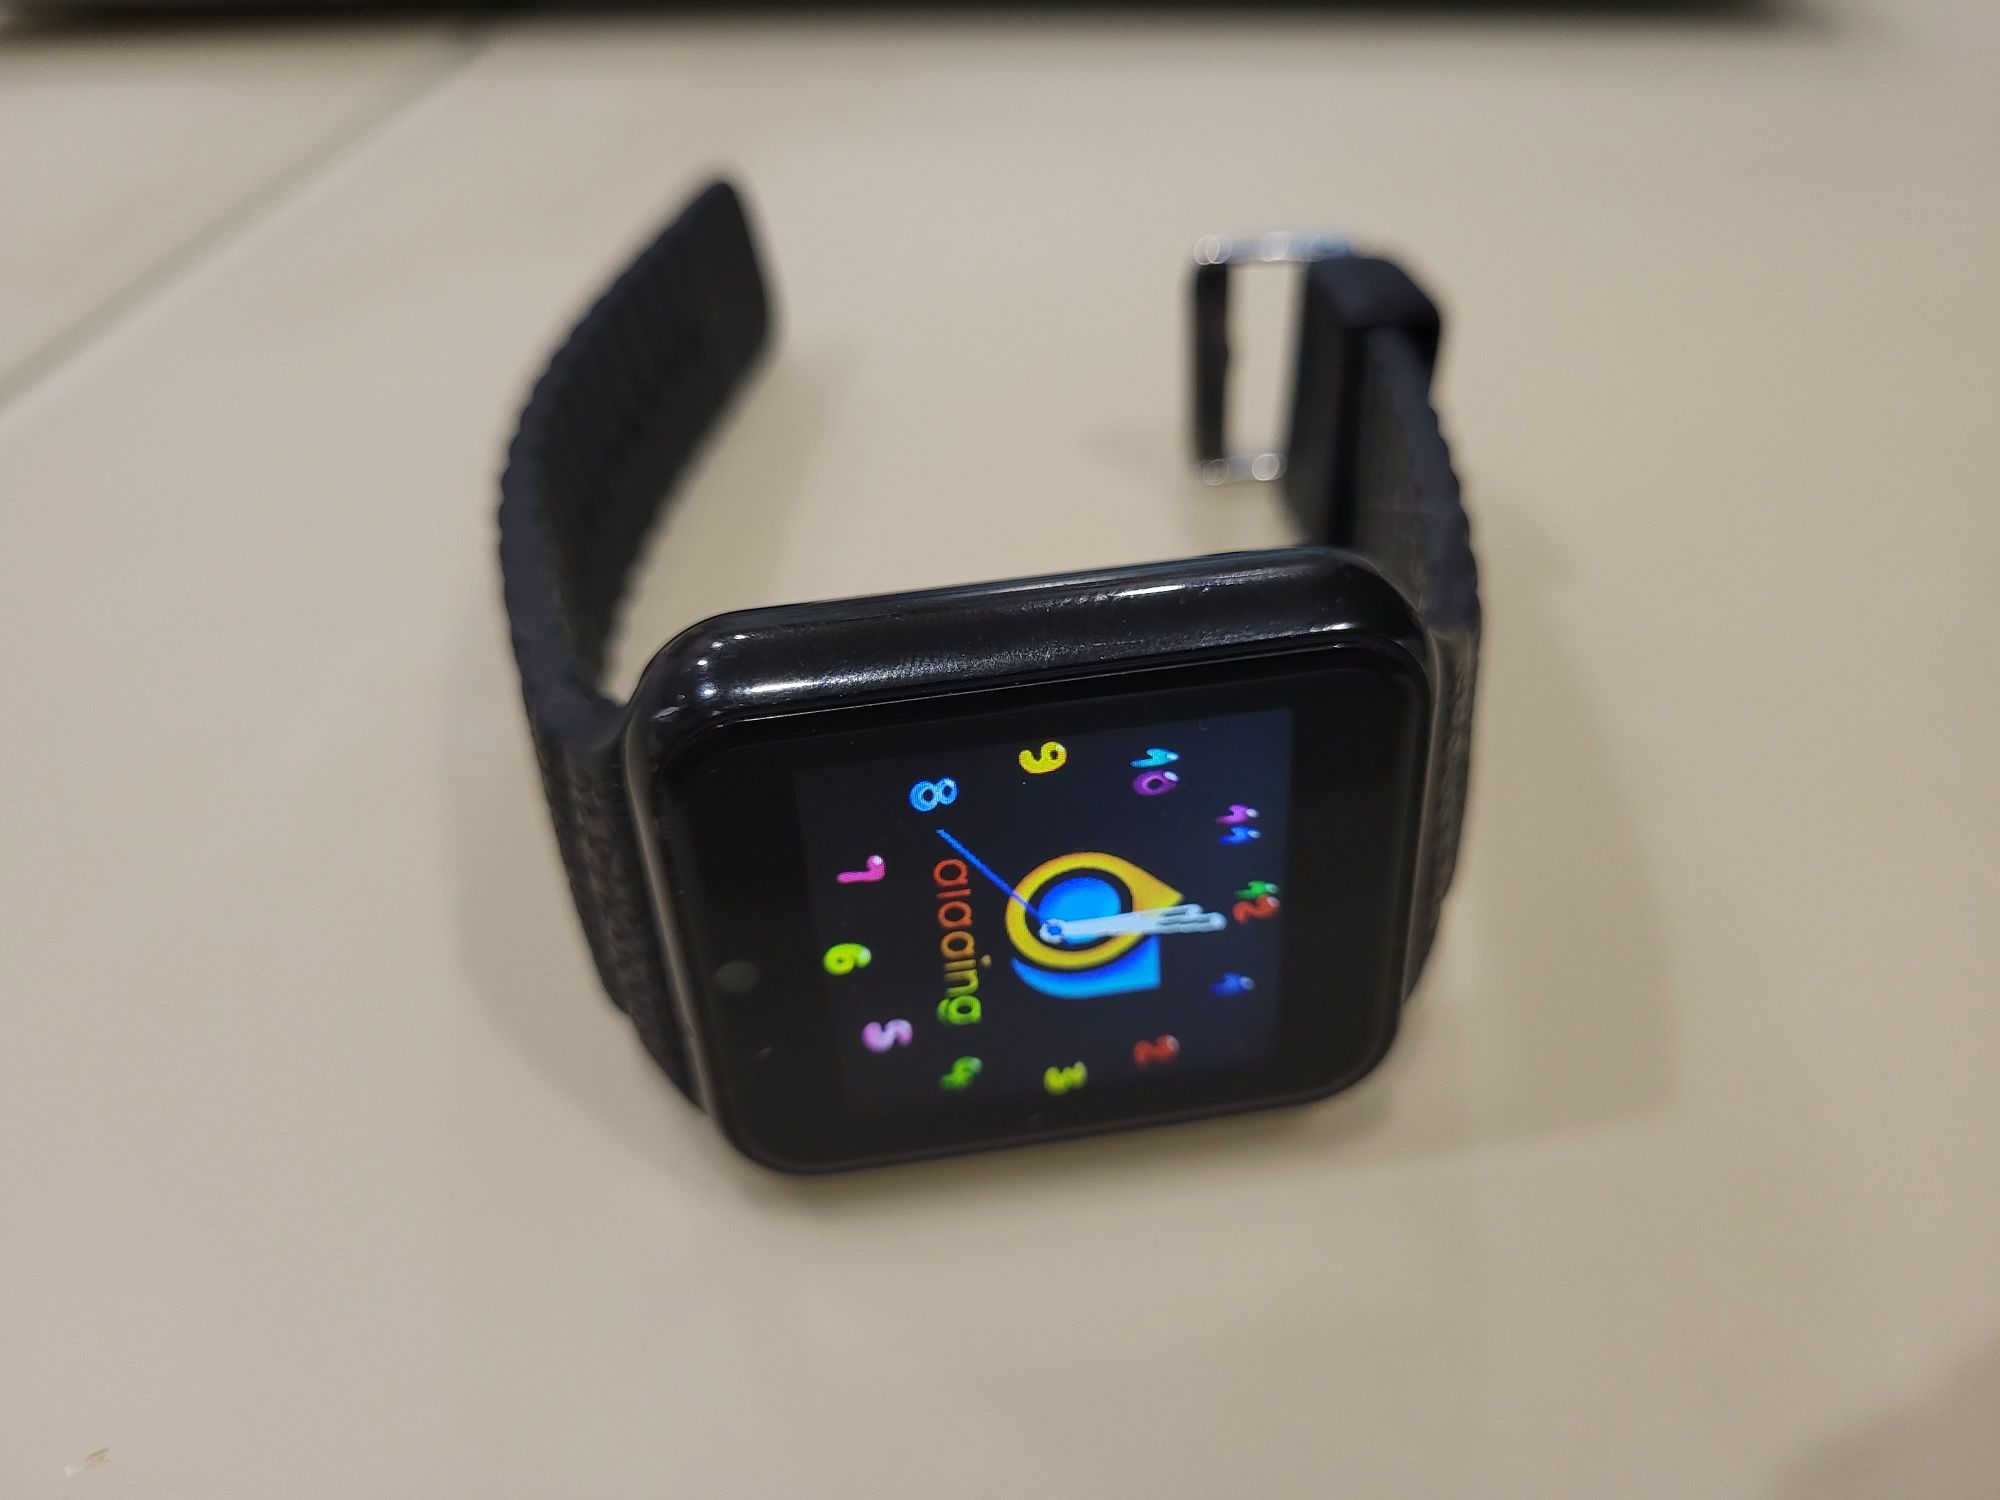 Дитячий смарт годинник-телефон з GPS Baby Smart Watch V7K